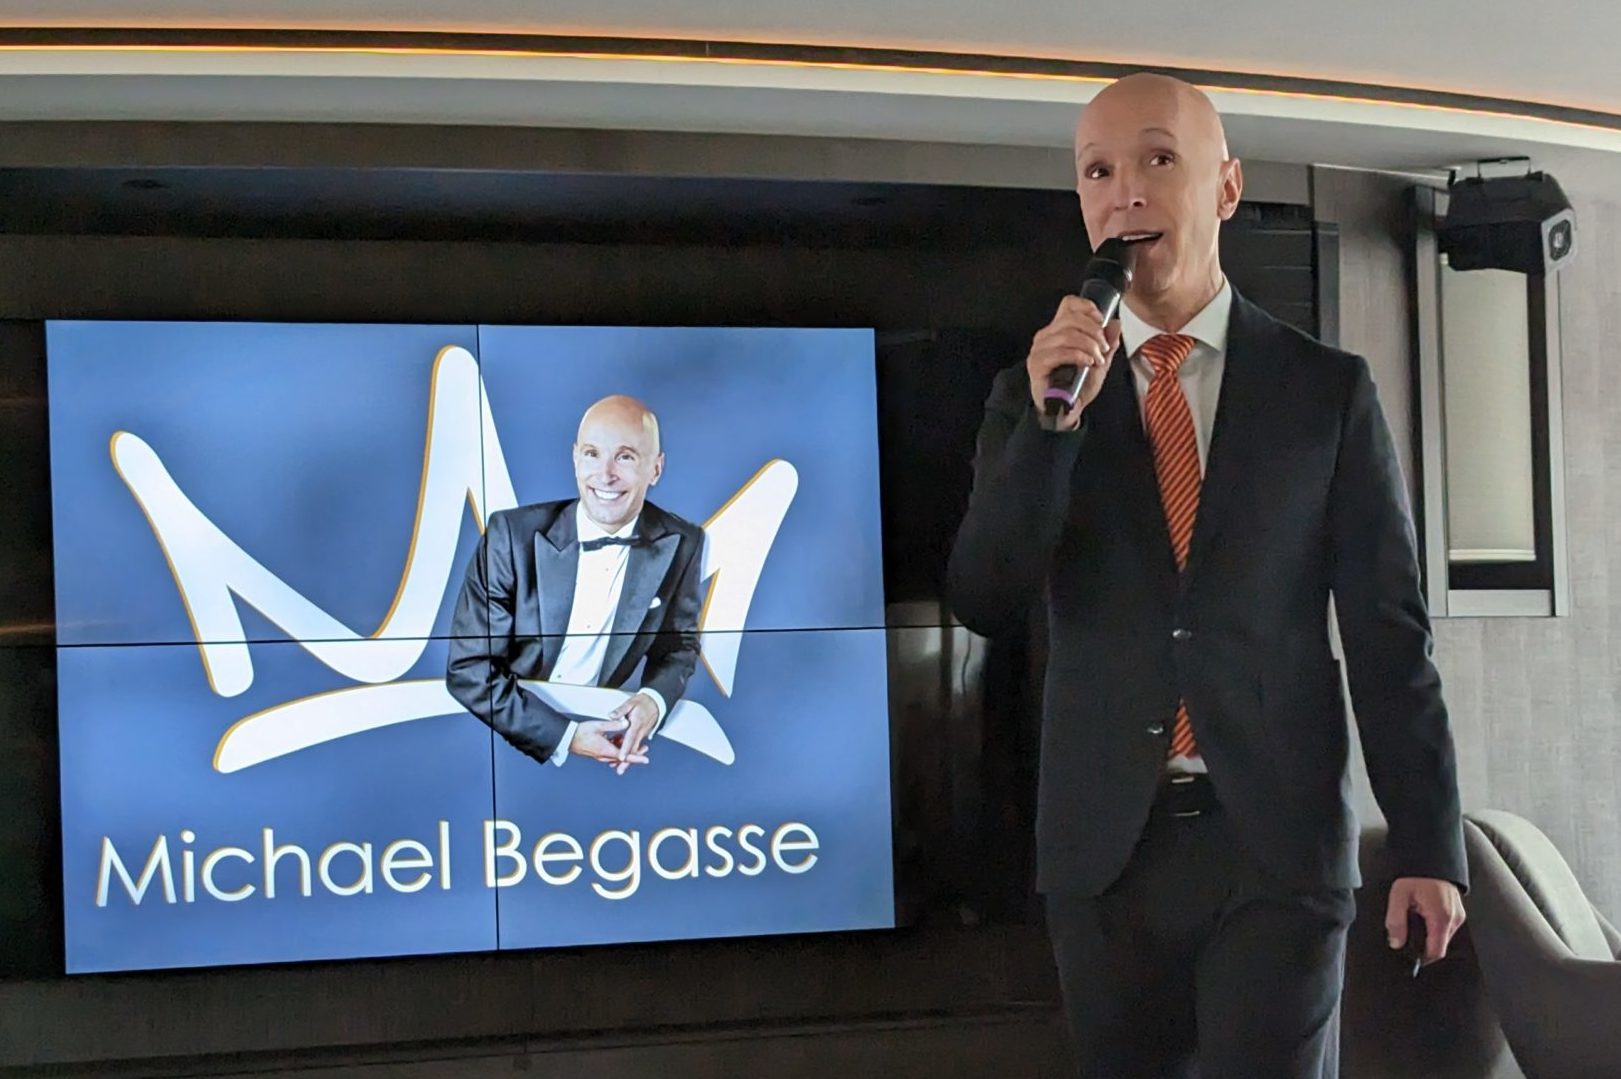 Michael Begasse